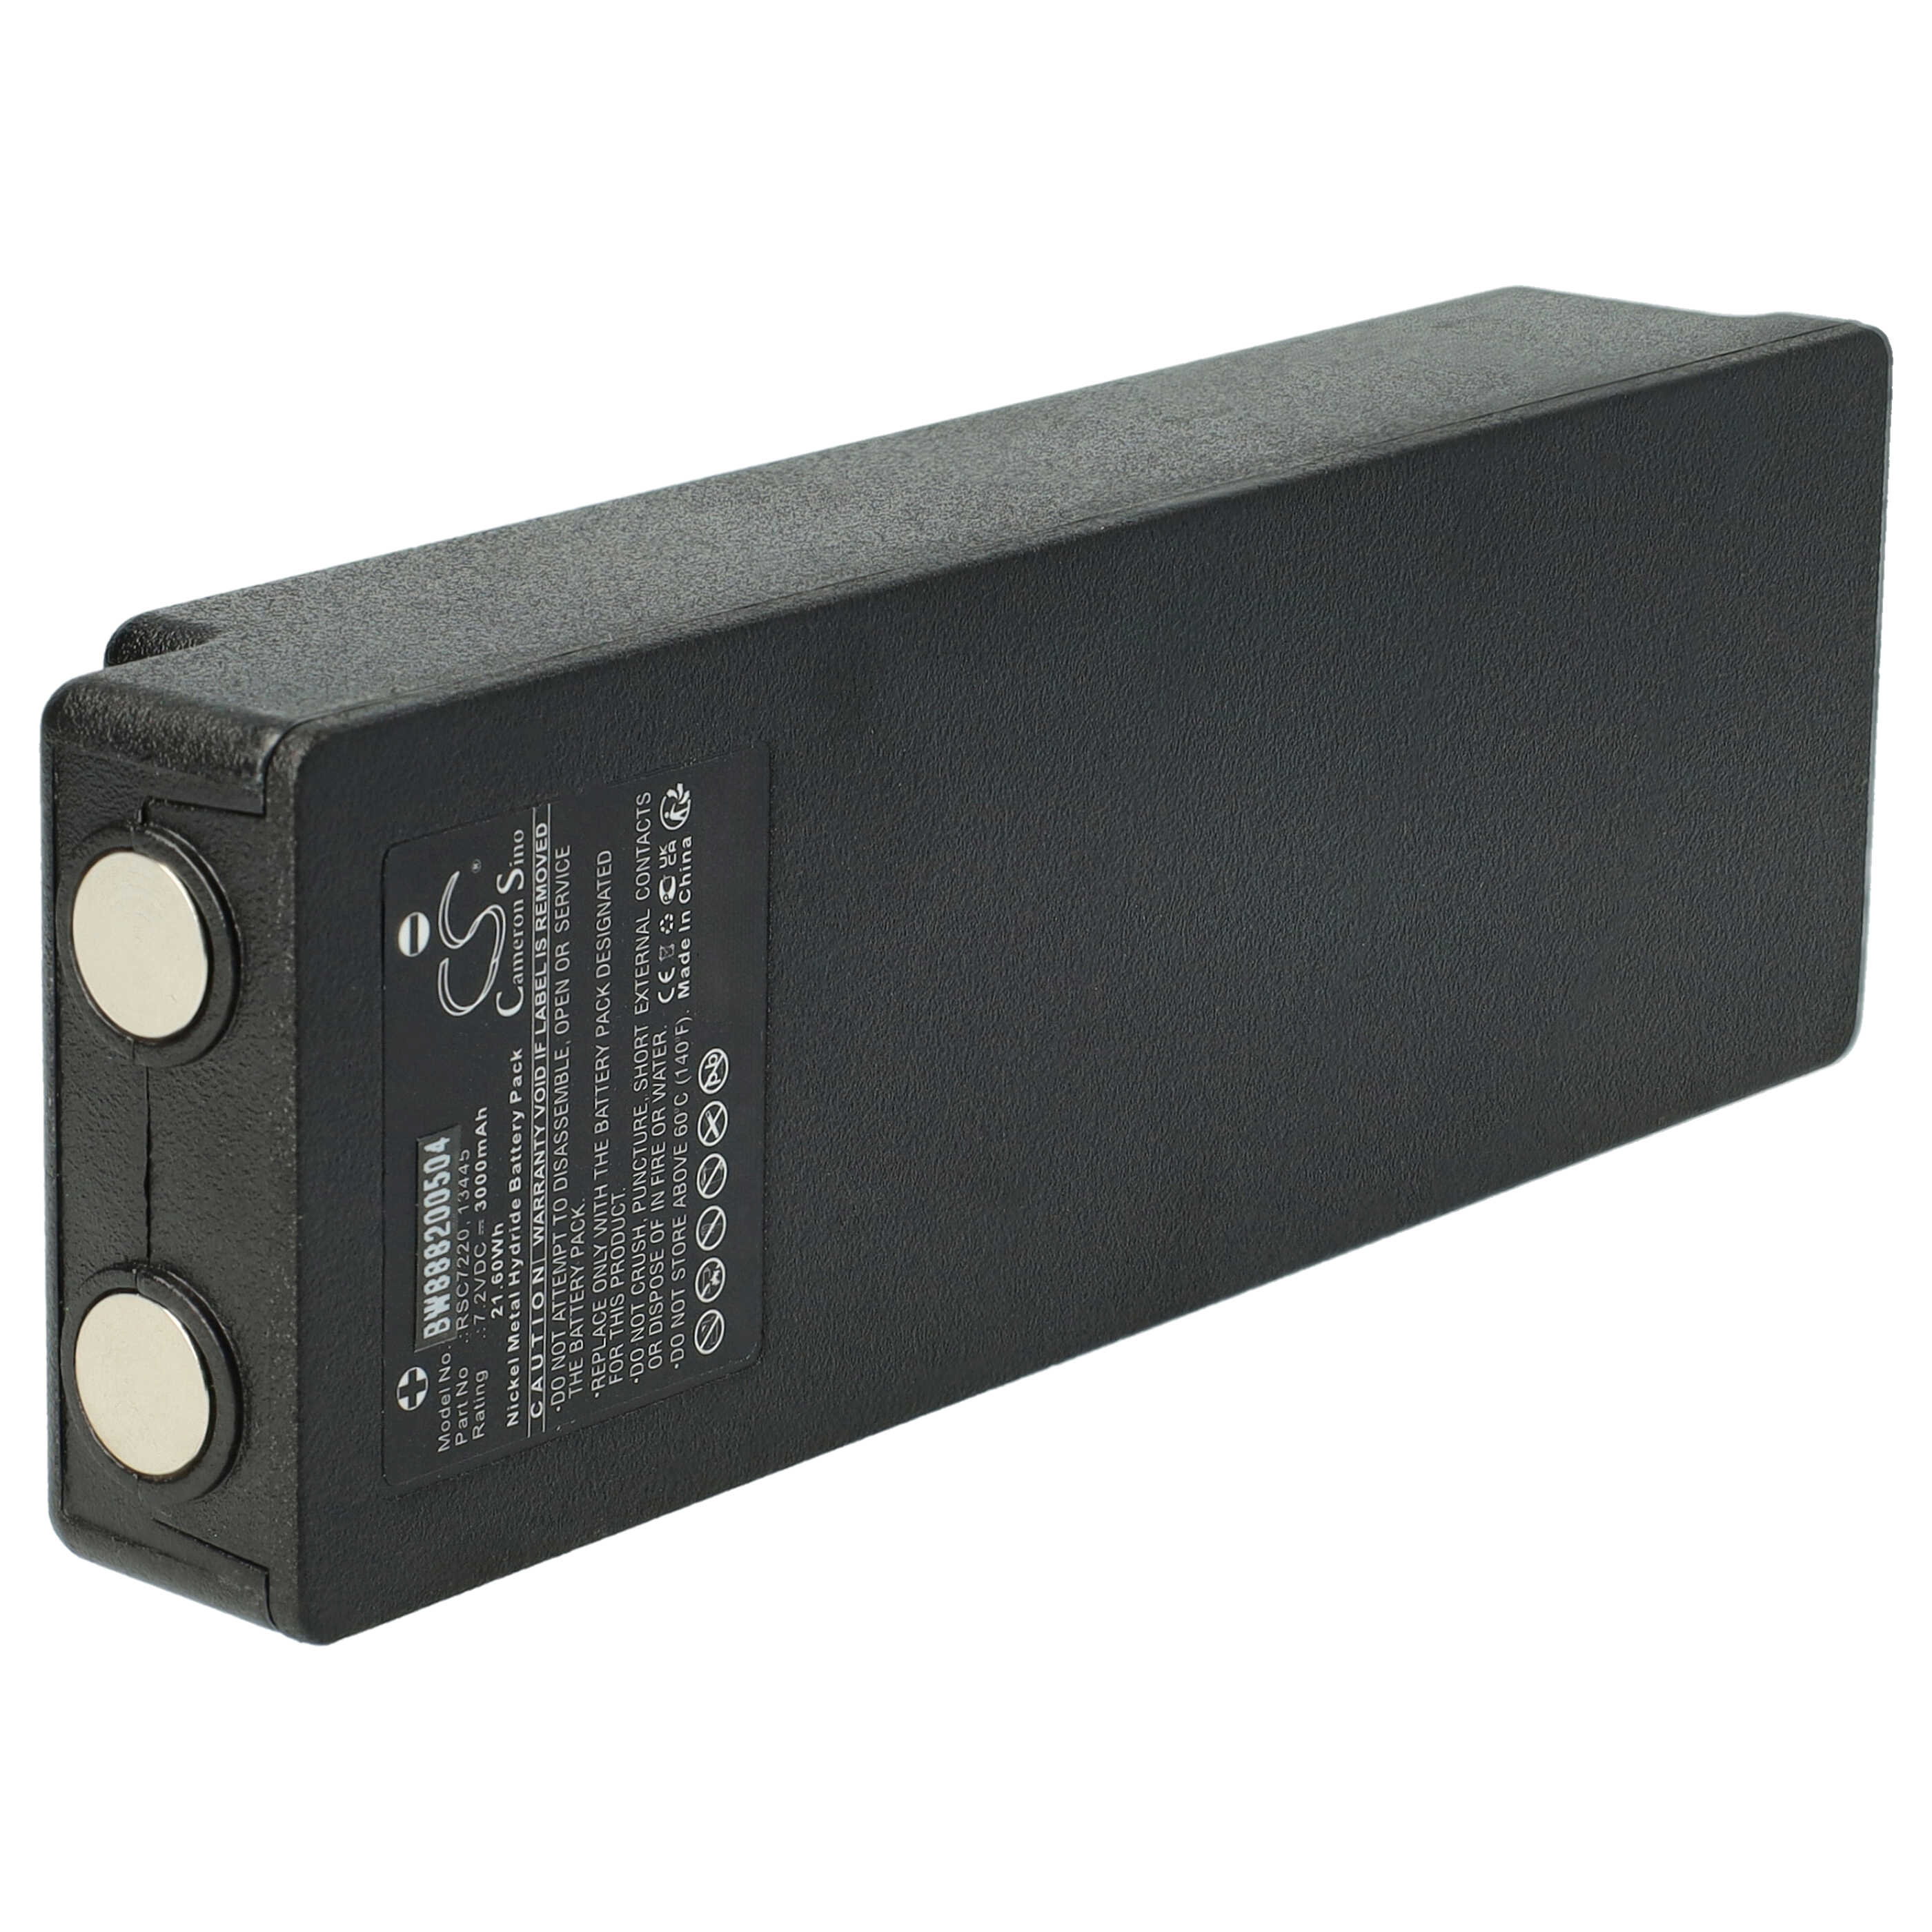 Batería reemplaza Palfinger 16131, 1026, 13445 para mando distancia industrial Palfinger - 3000 mAh 7,2 V NiMH